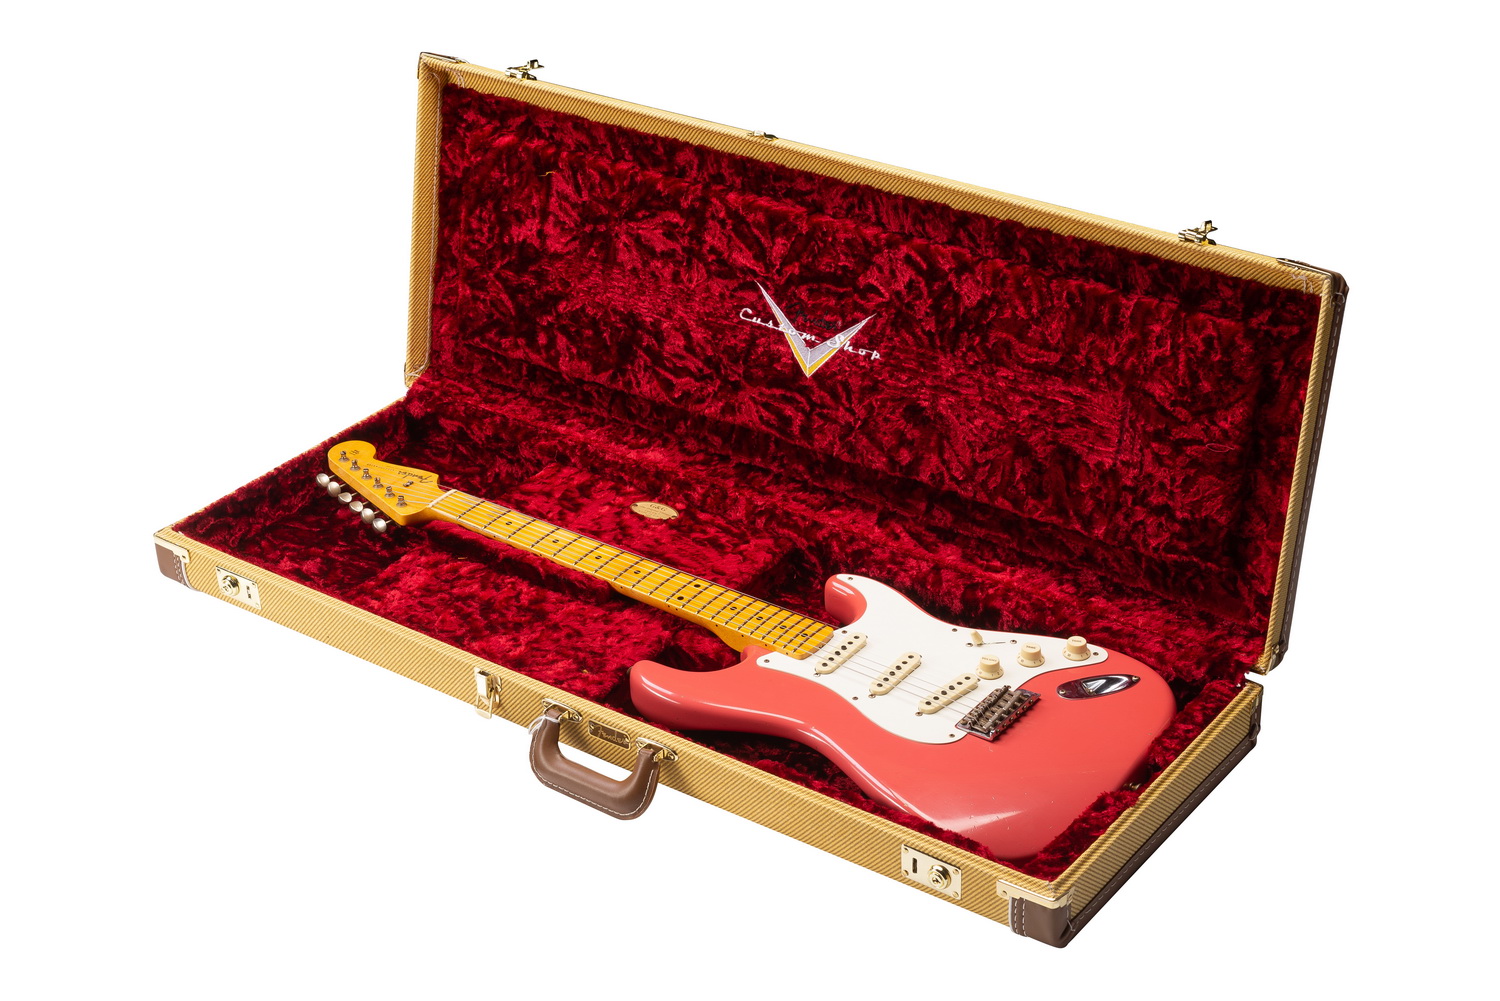 Fender 1958 Stratocaster Journeyman Relic Faded/Aged Fiesta Red  электрогитара Custom Shop, цвет красный